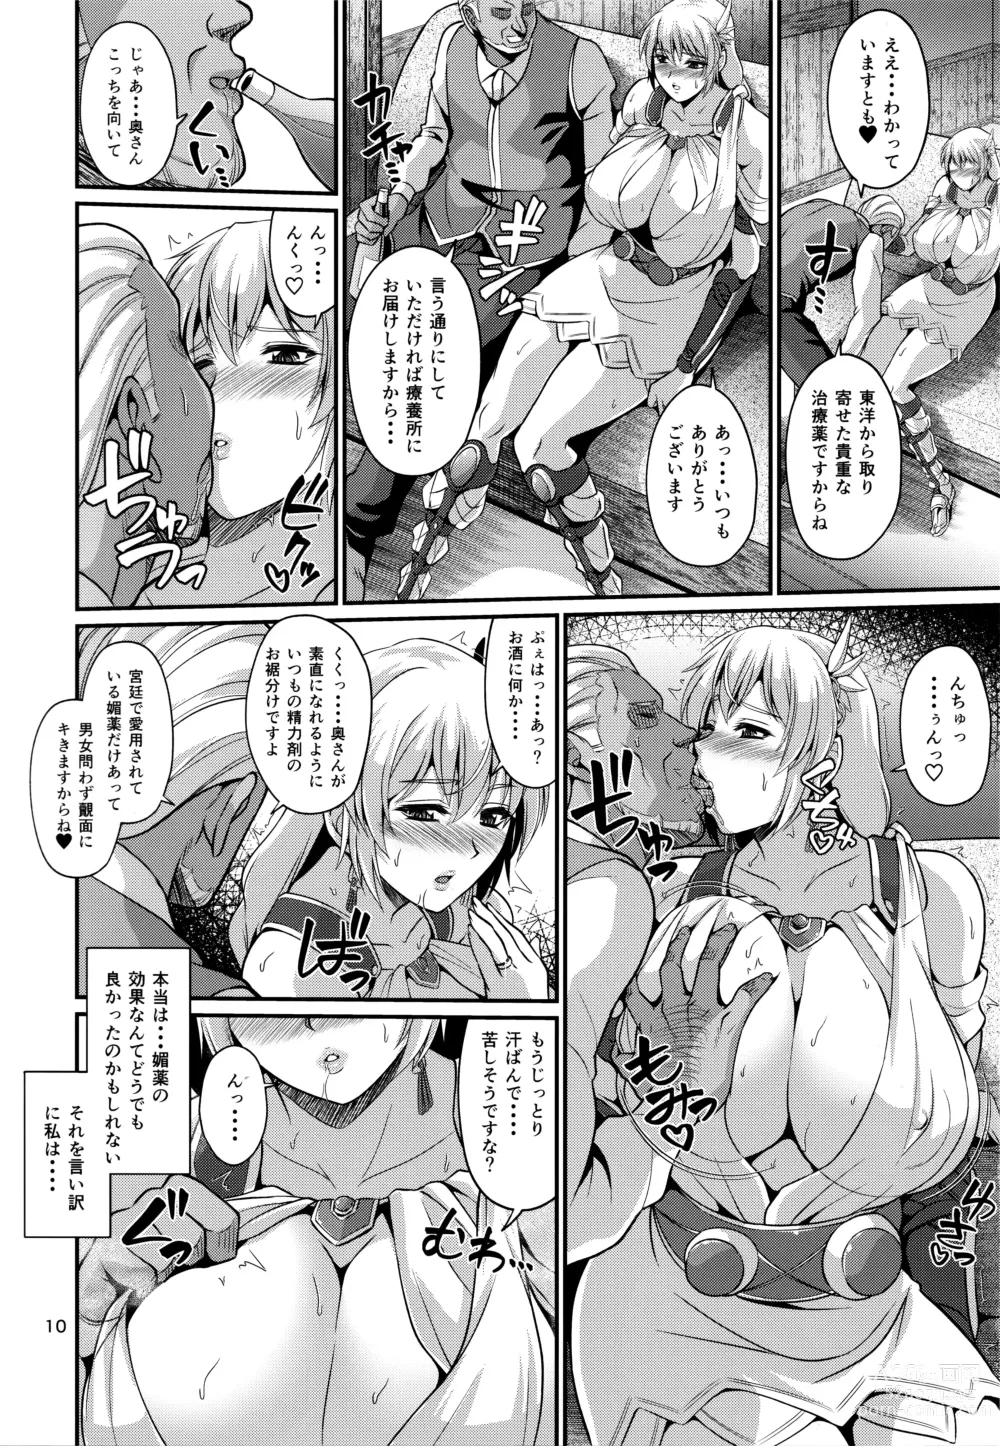 Page 8 of doujinshi Pan-ya no Oku-san Returns